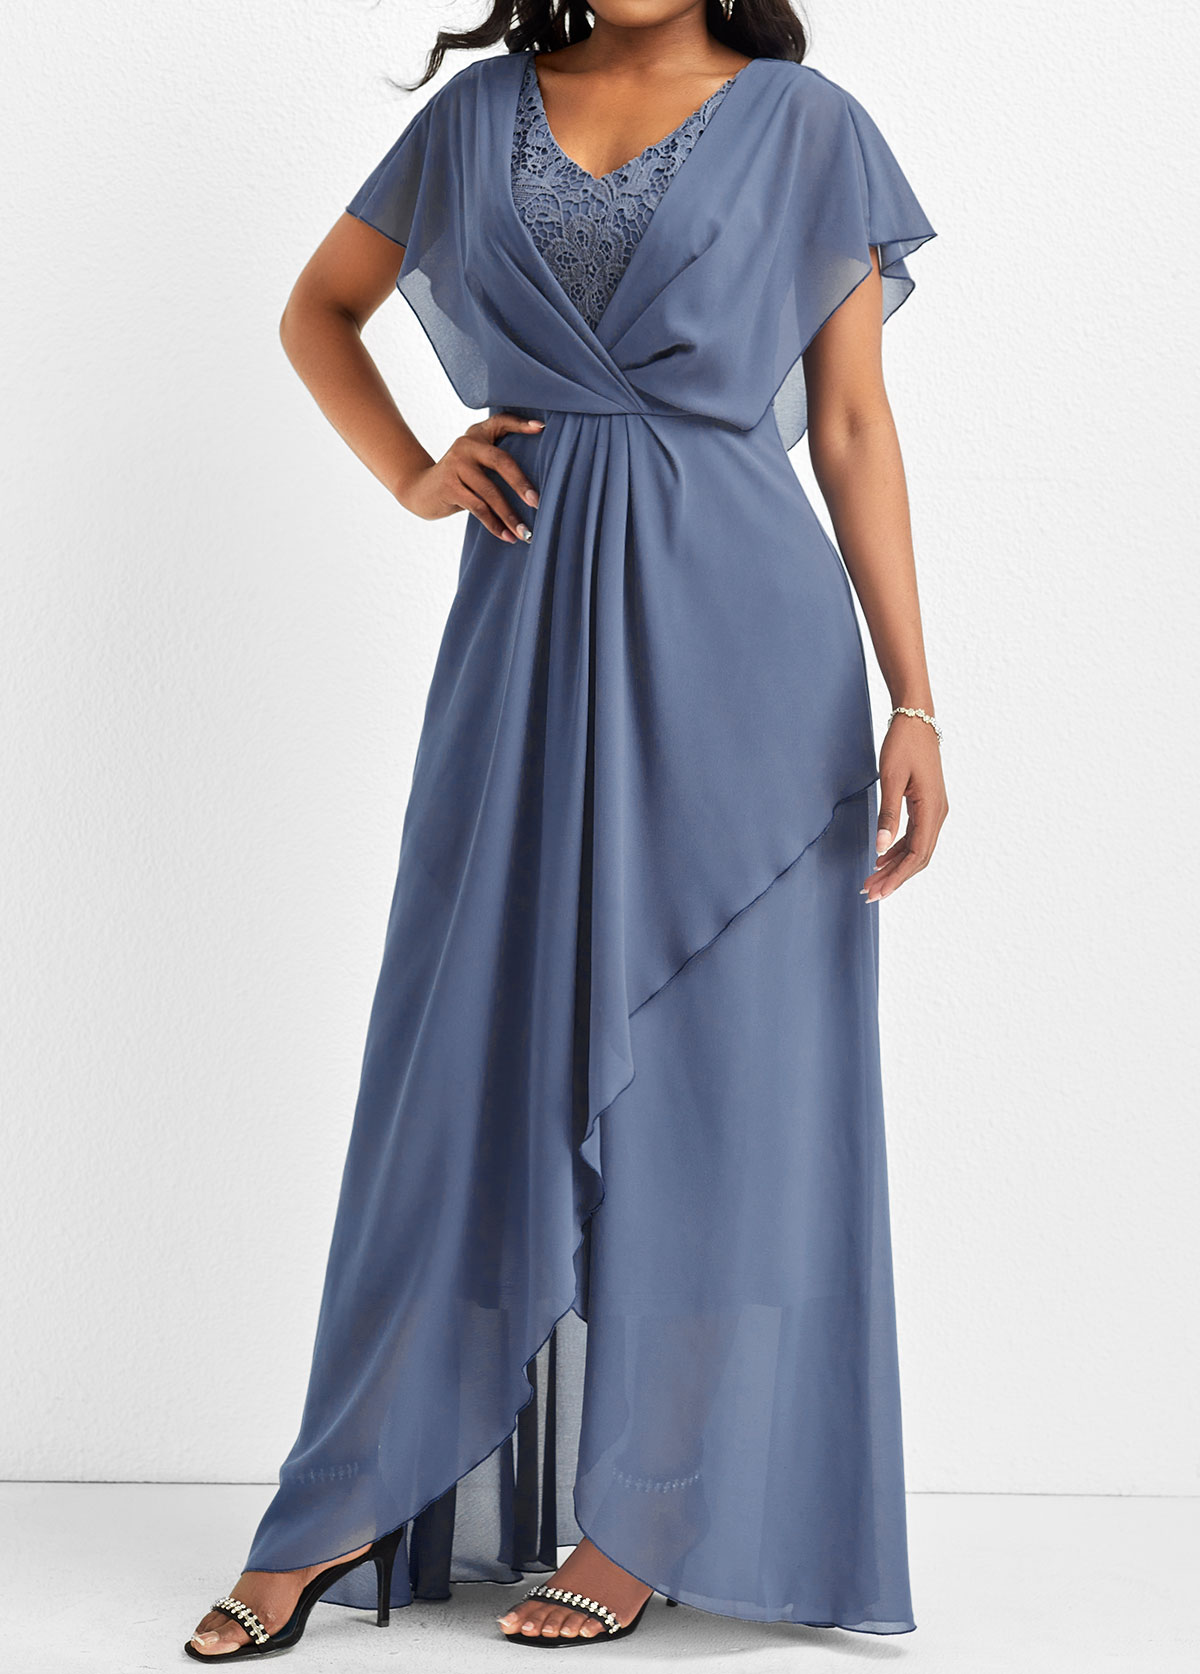 Dusty Blue Lace Short Sleeve Maxi Dress